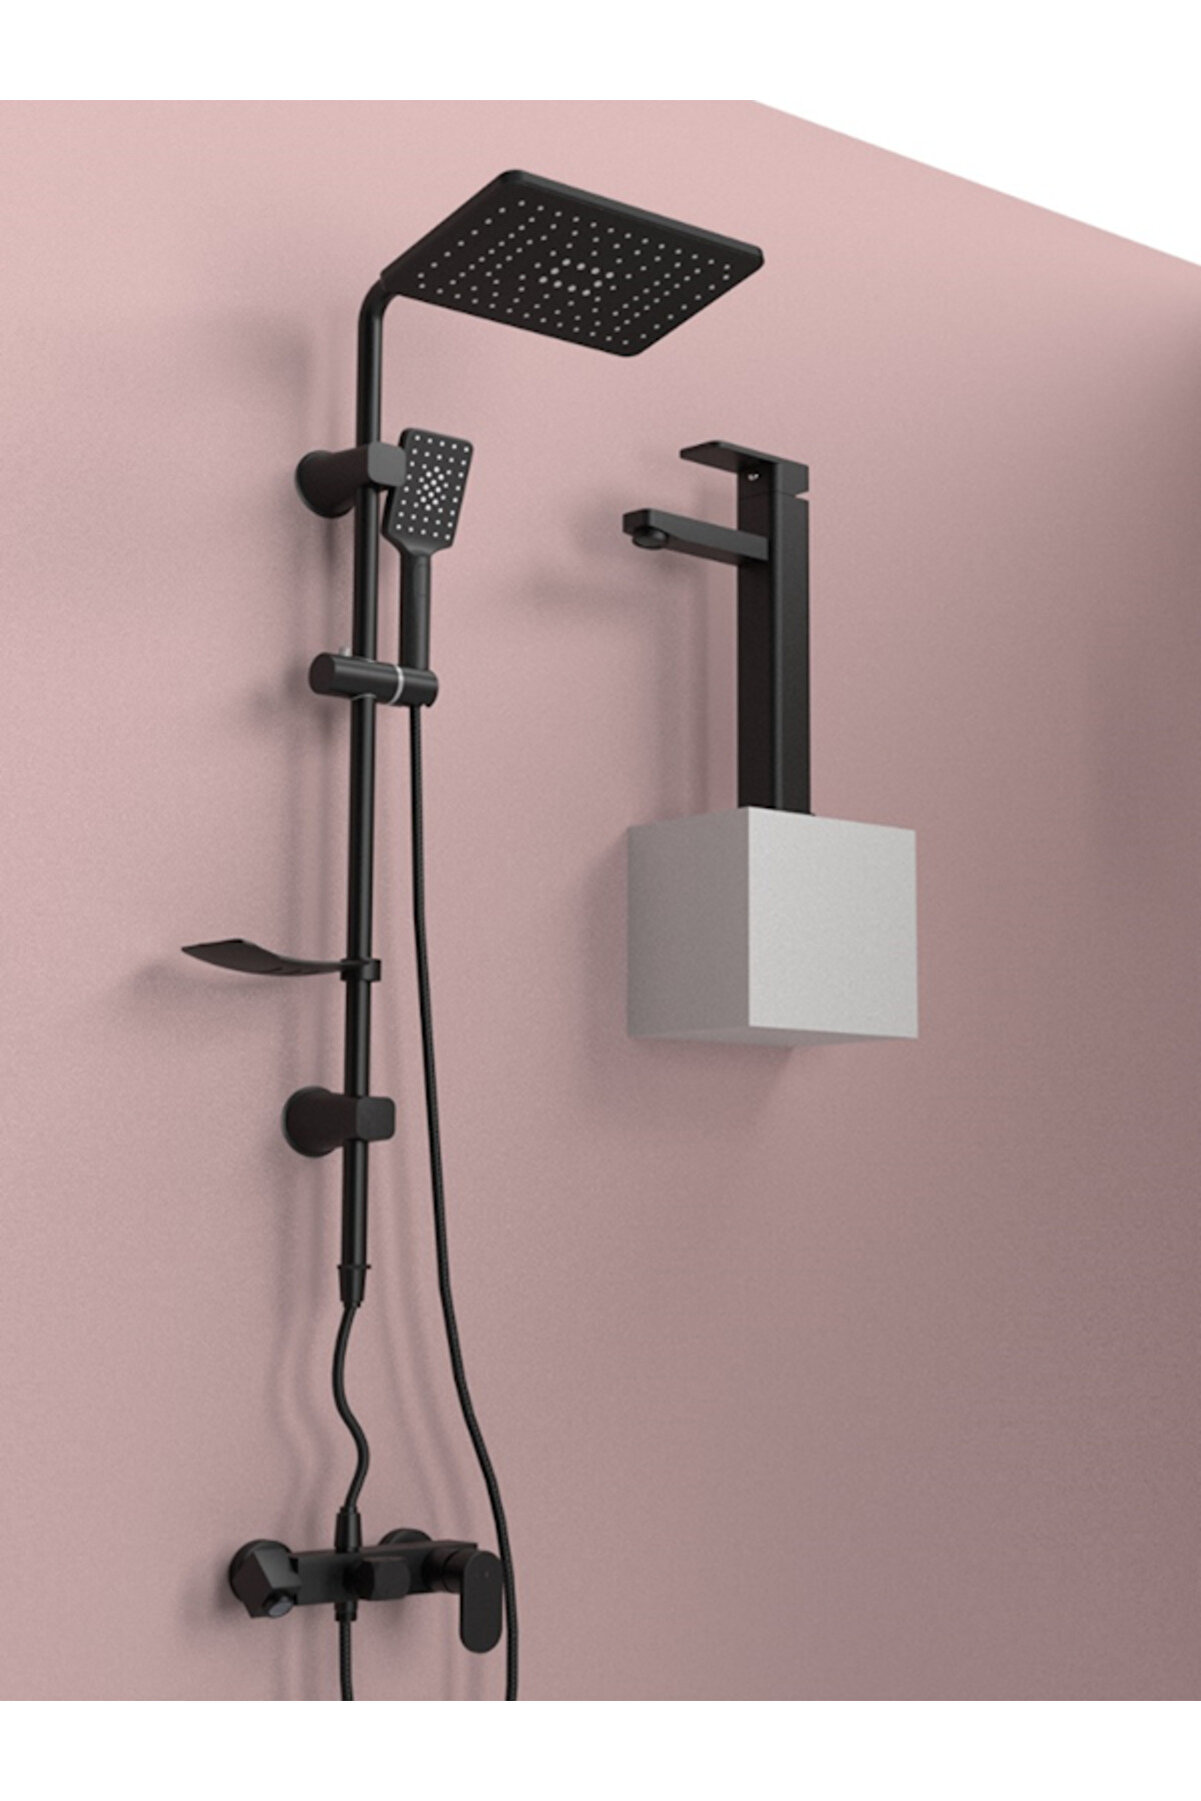 FAWER Faucet & Shower Siyah Çanak Lavabo&banyo Bataryası &fawer Siyah Robot Duş Seti - 604b3